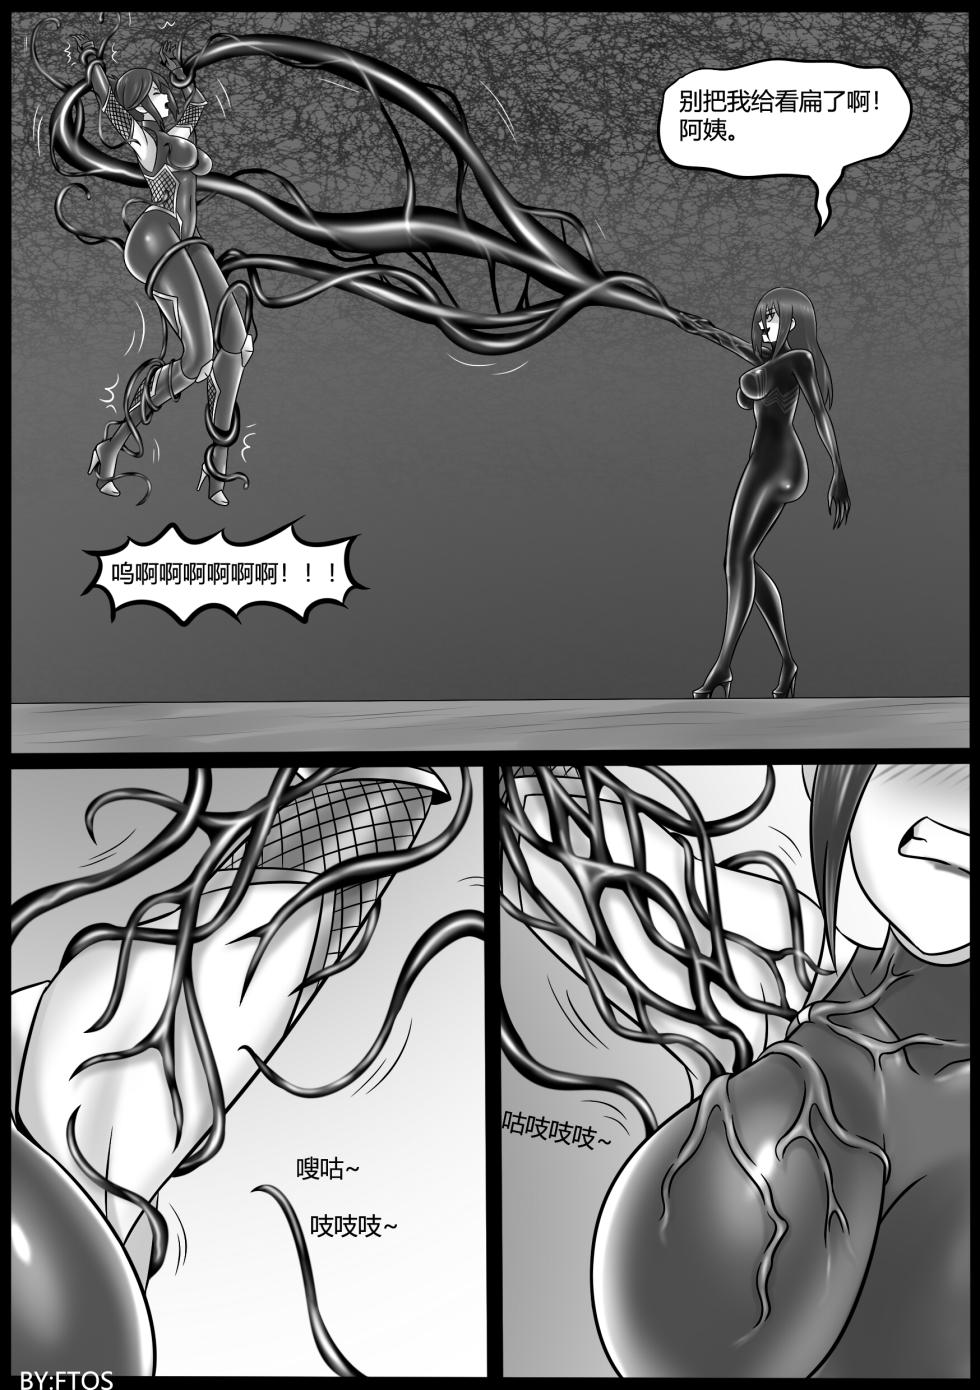 [BLACKFTOS] Venom Invasion V - Page 13